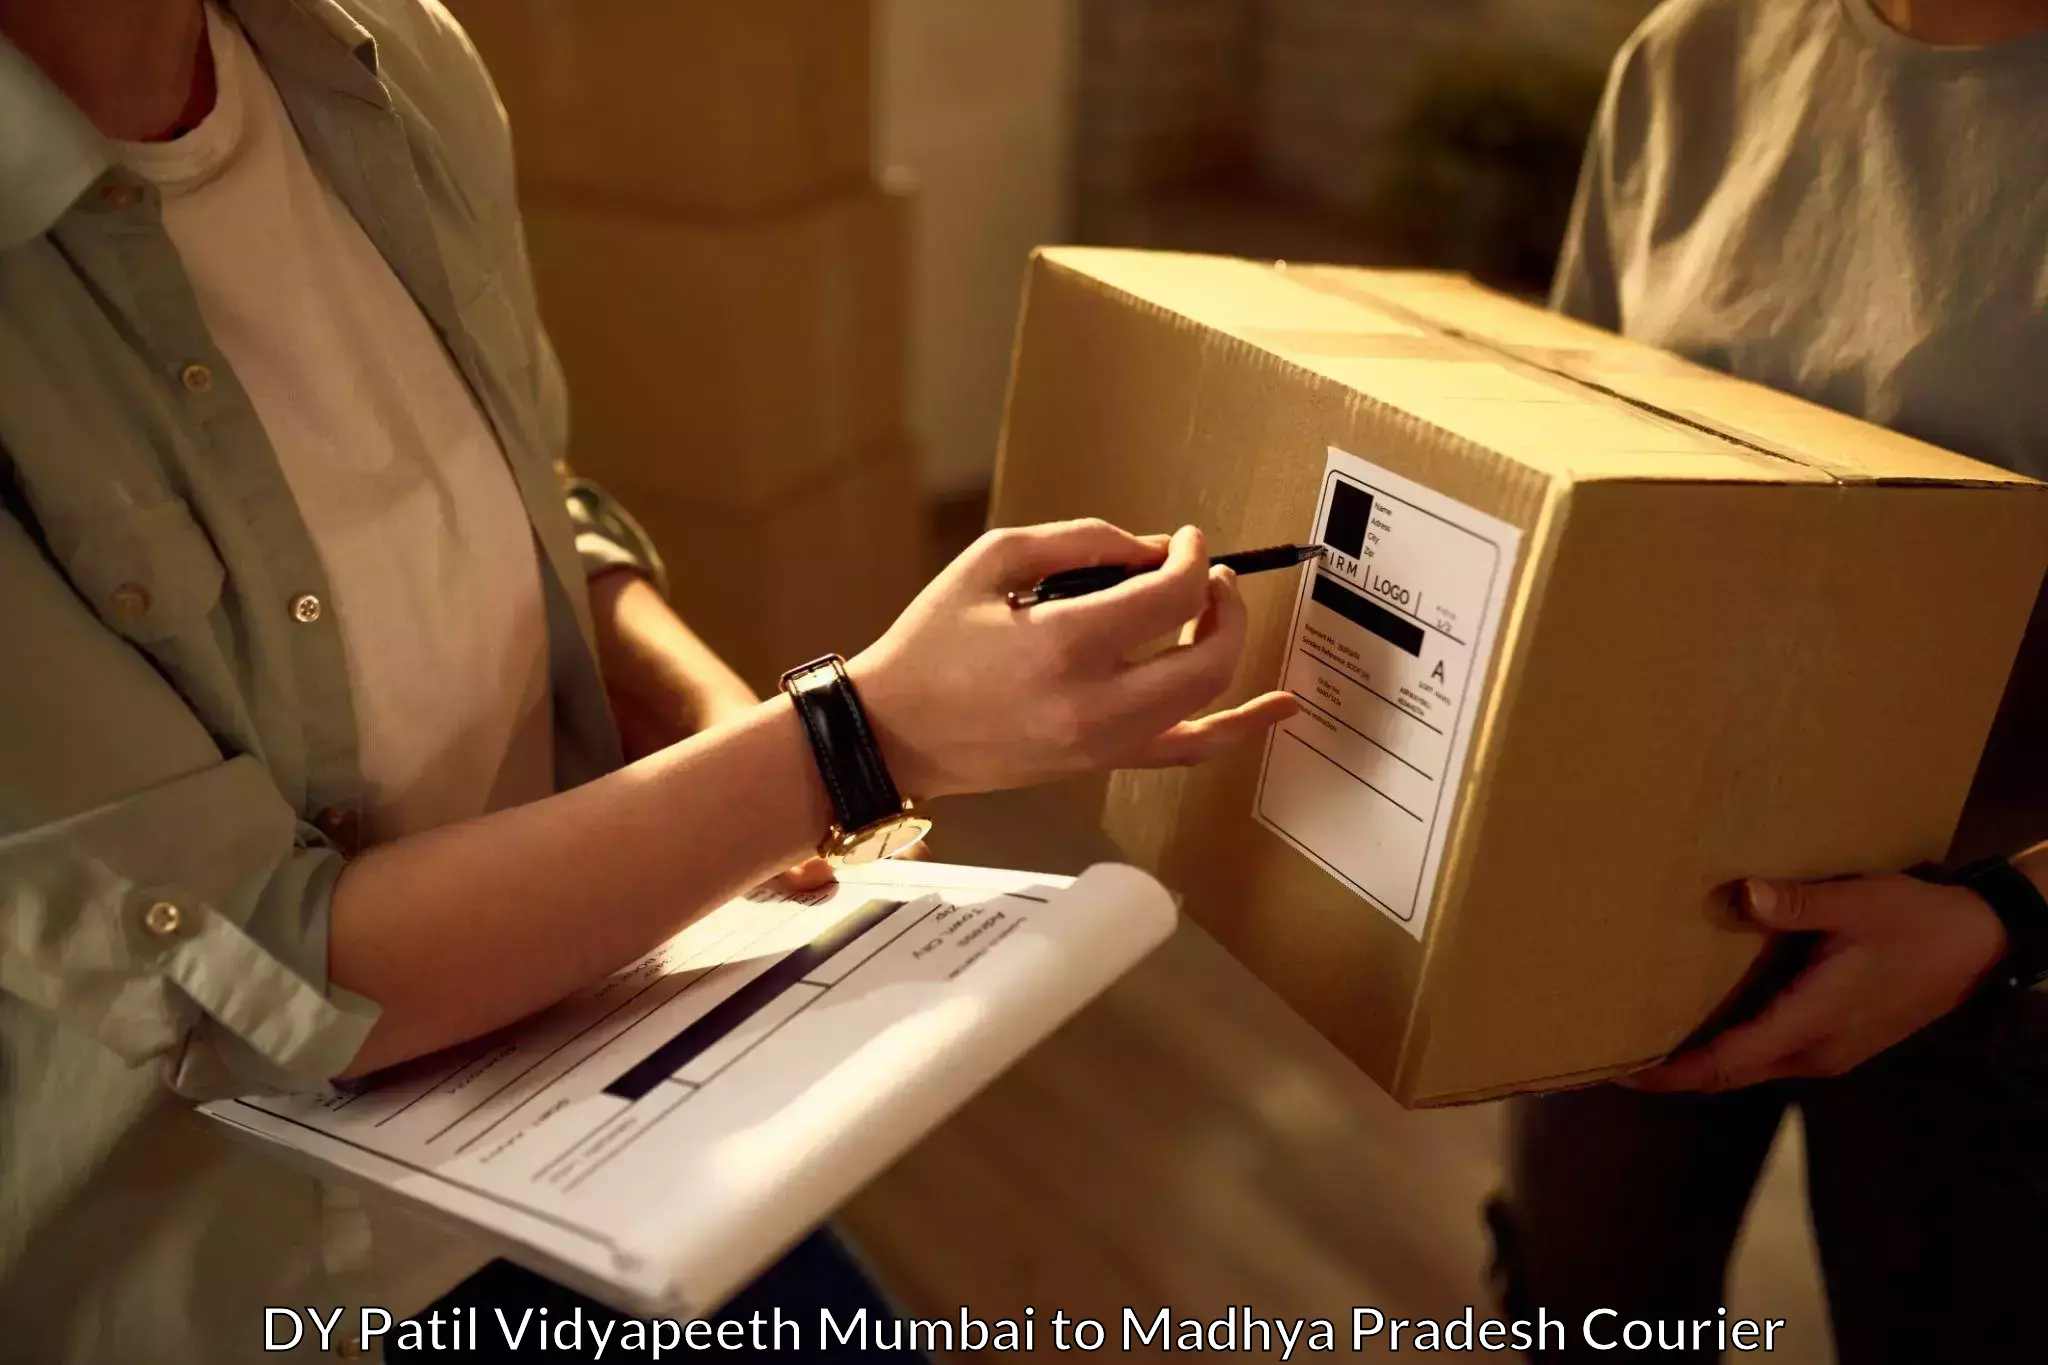 On-demand courier DY Patil Vidyapeeth Mumbai to Ashoknagar